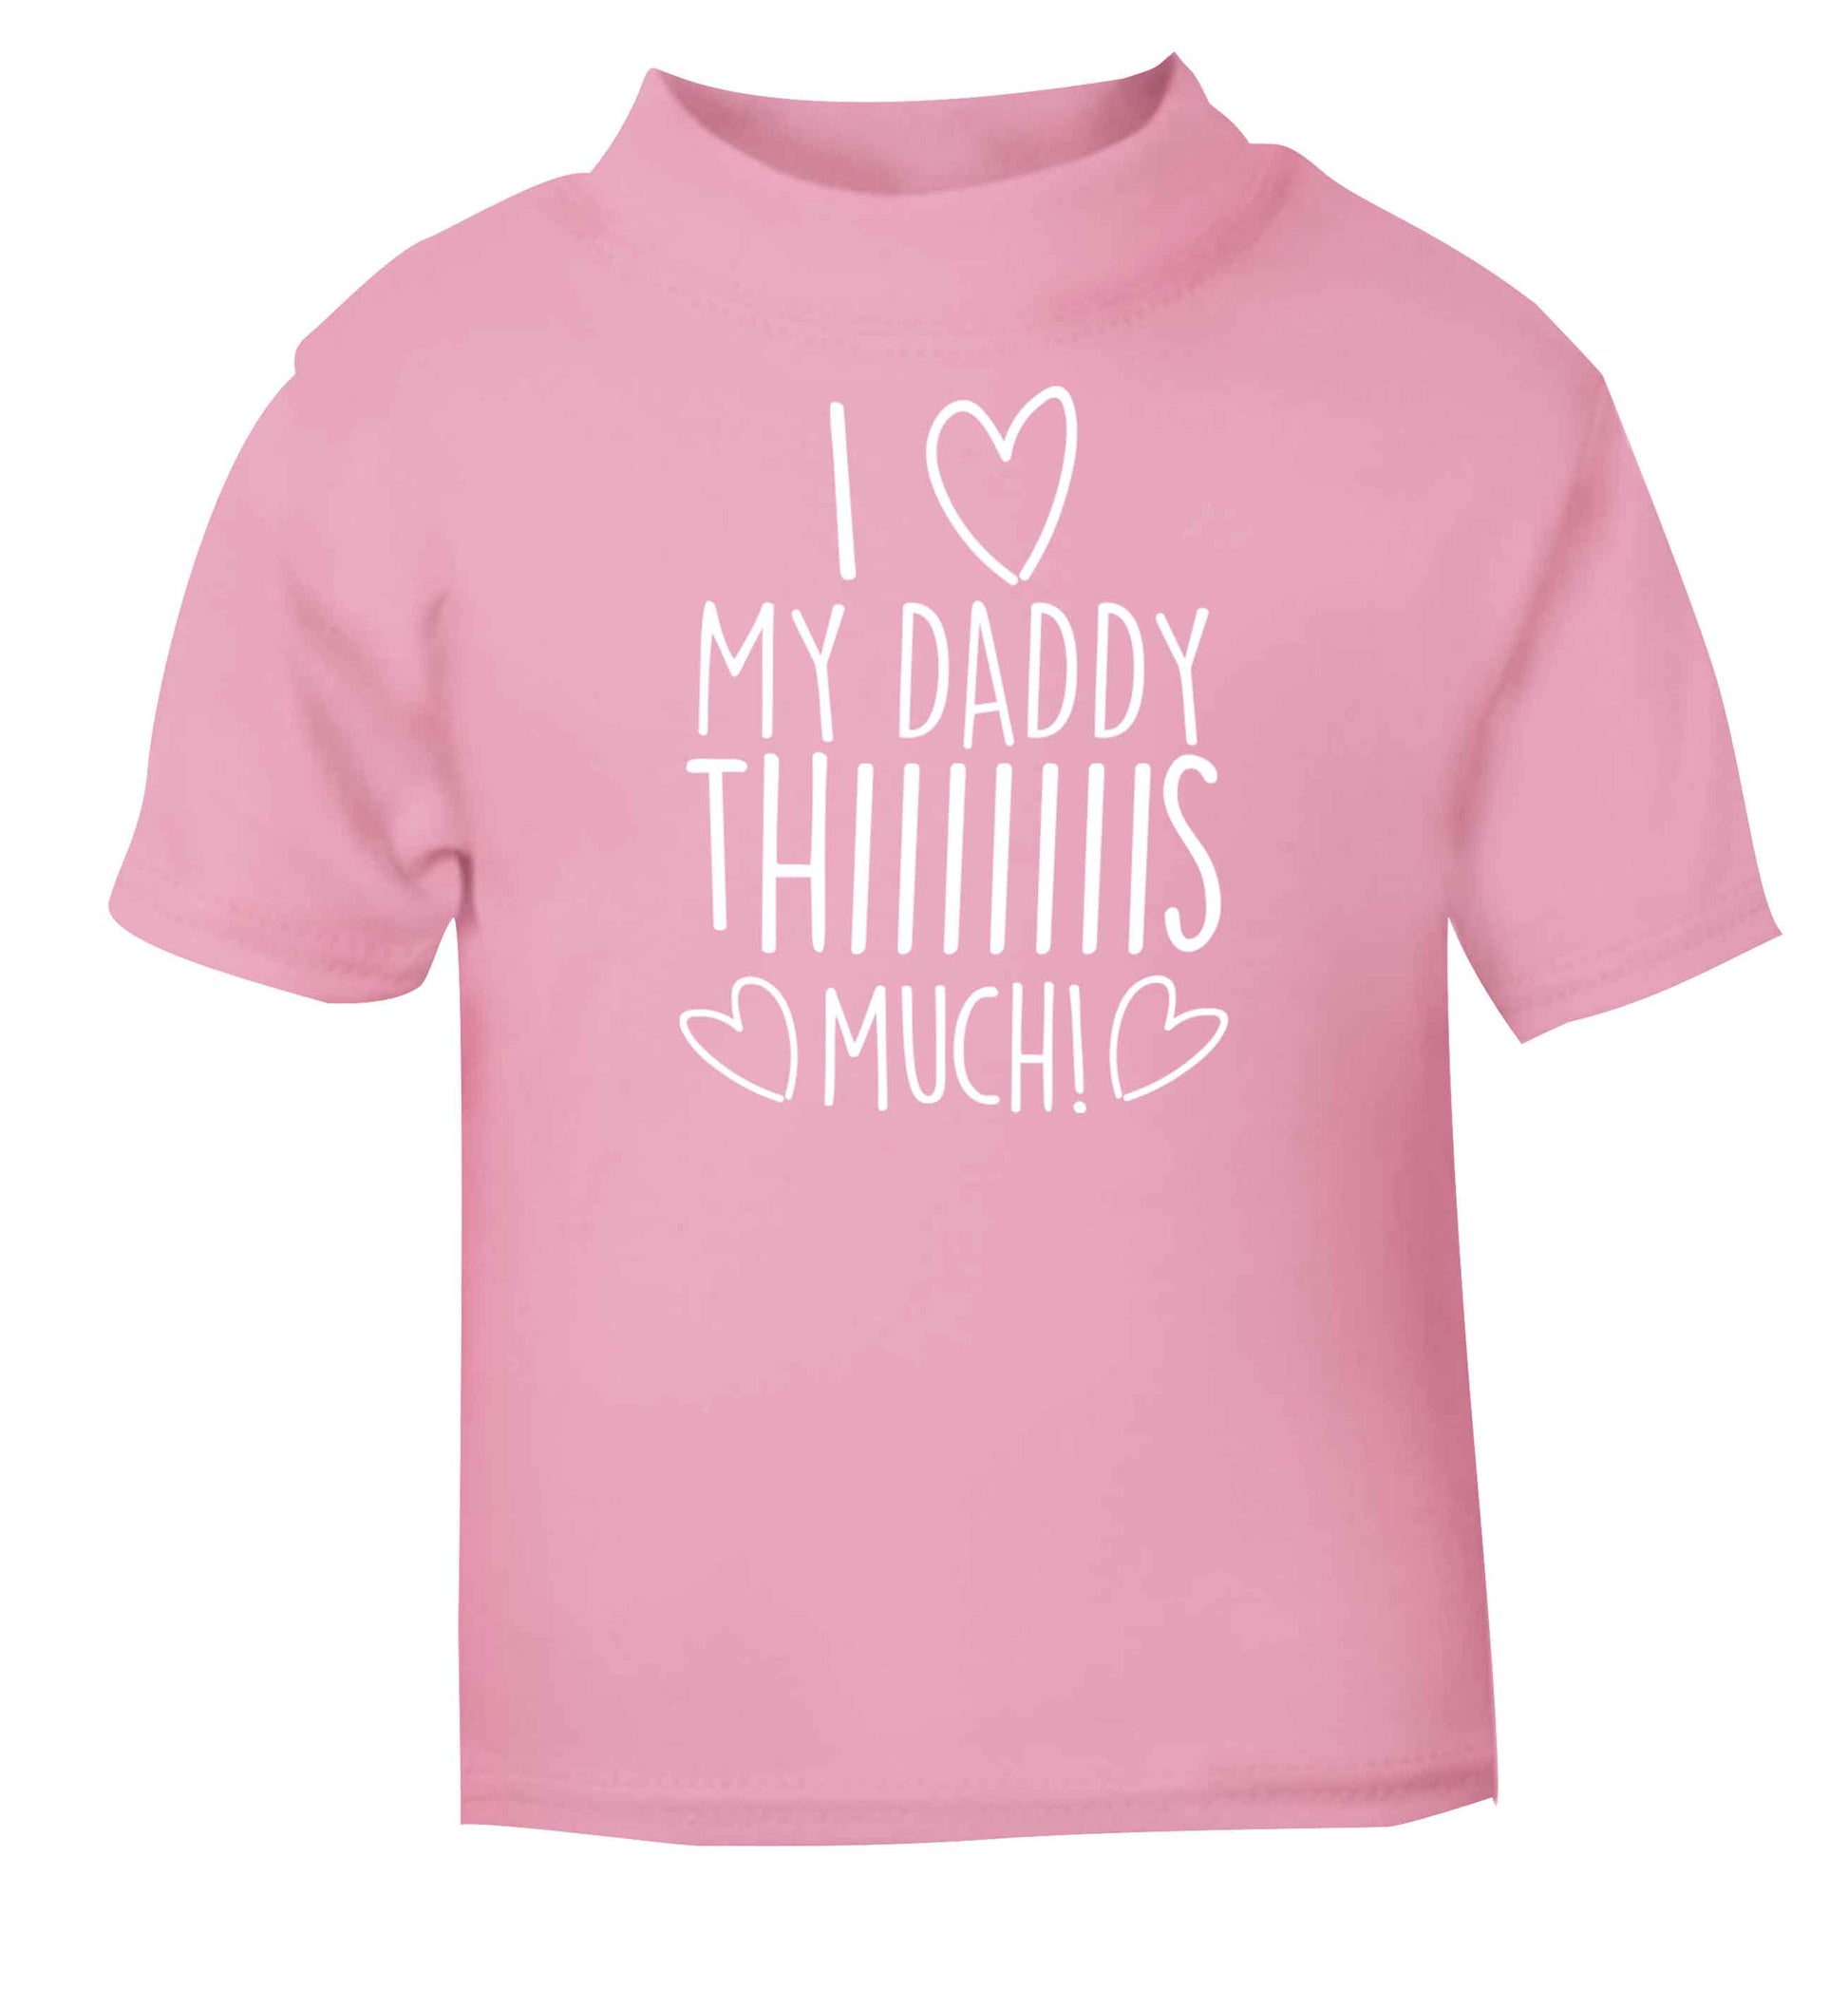 I love my daddy thiiiiis much! light pink baby toddler Tshirt 2 Years